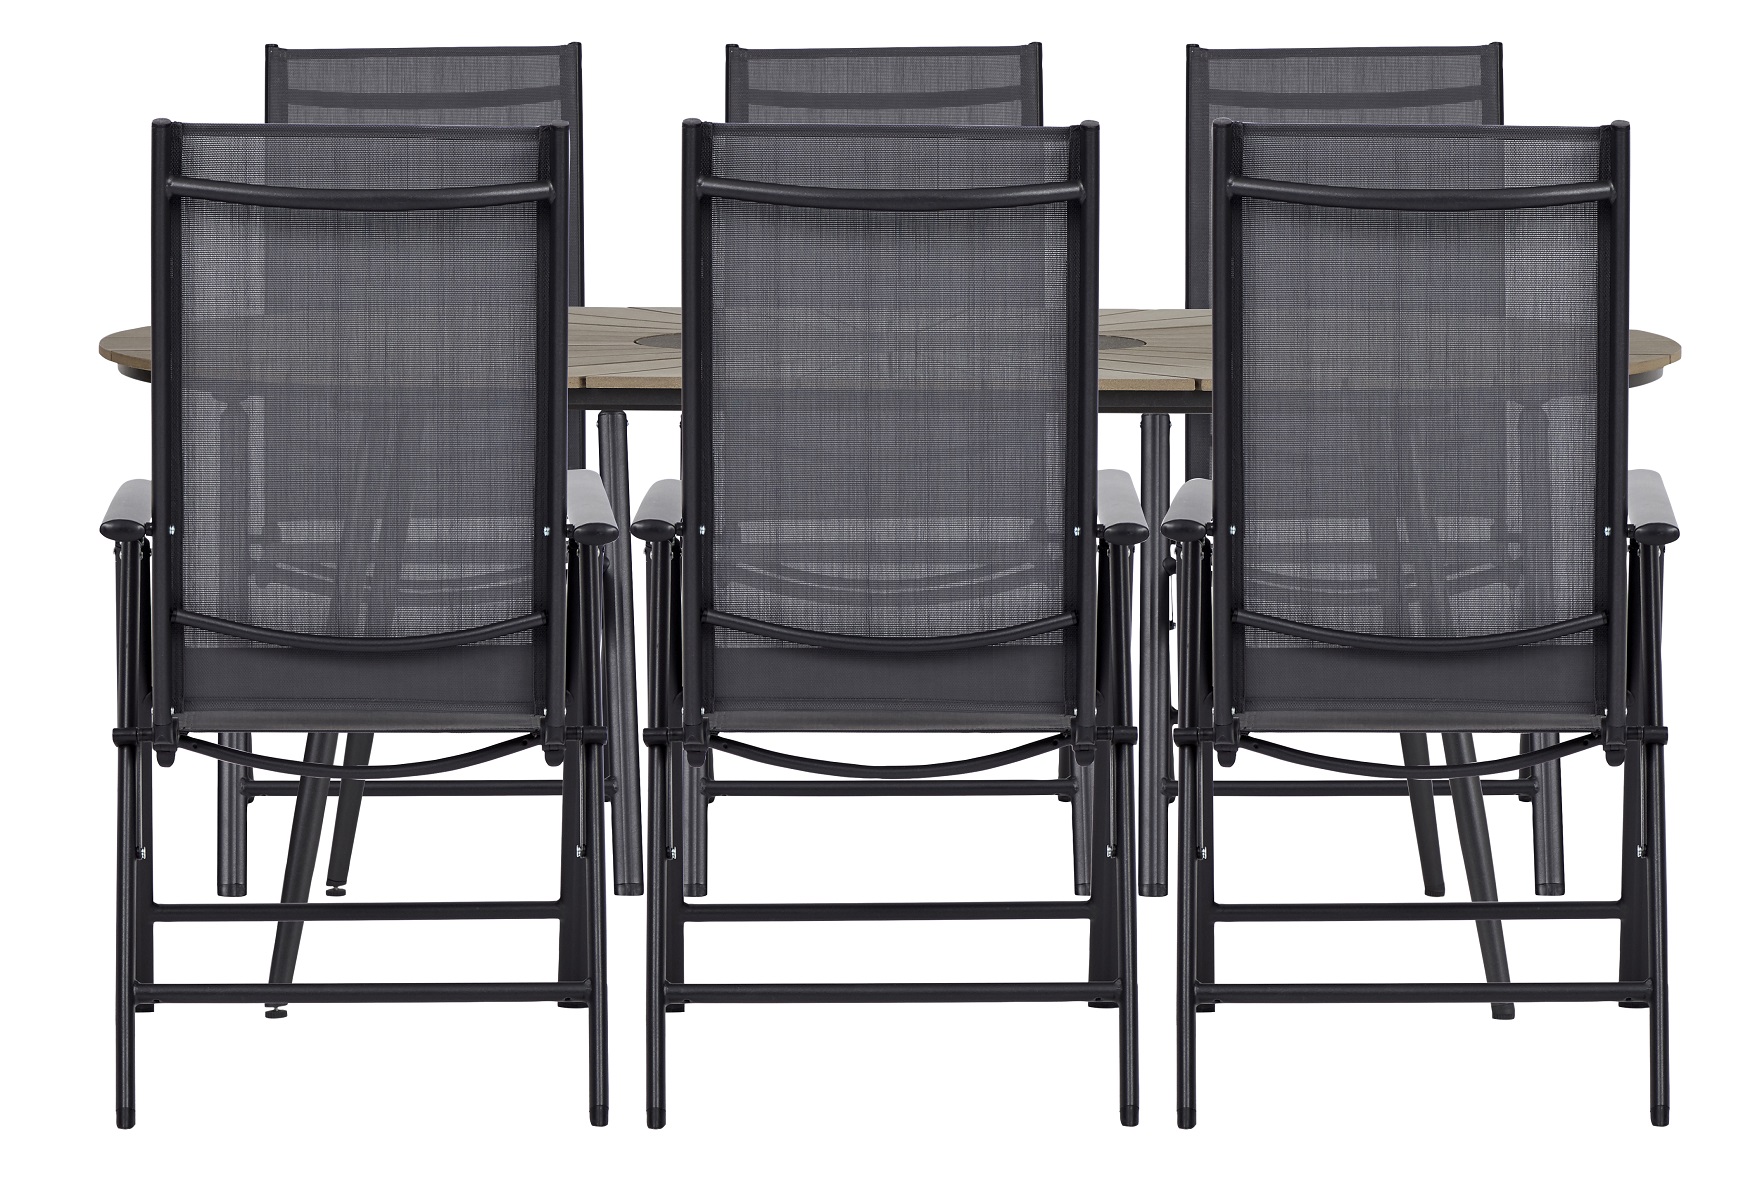 Living Outdoor - Fur Garden Table 195x103 cm - Polywood/Spraytone with 6 pcs Aaroe Position Garden Chairs - Textil - Black/Grey/Cappuccino Oak - Bundle